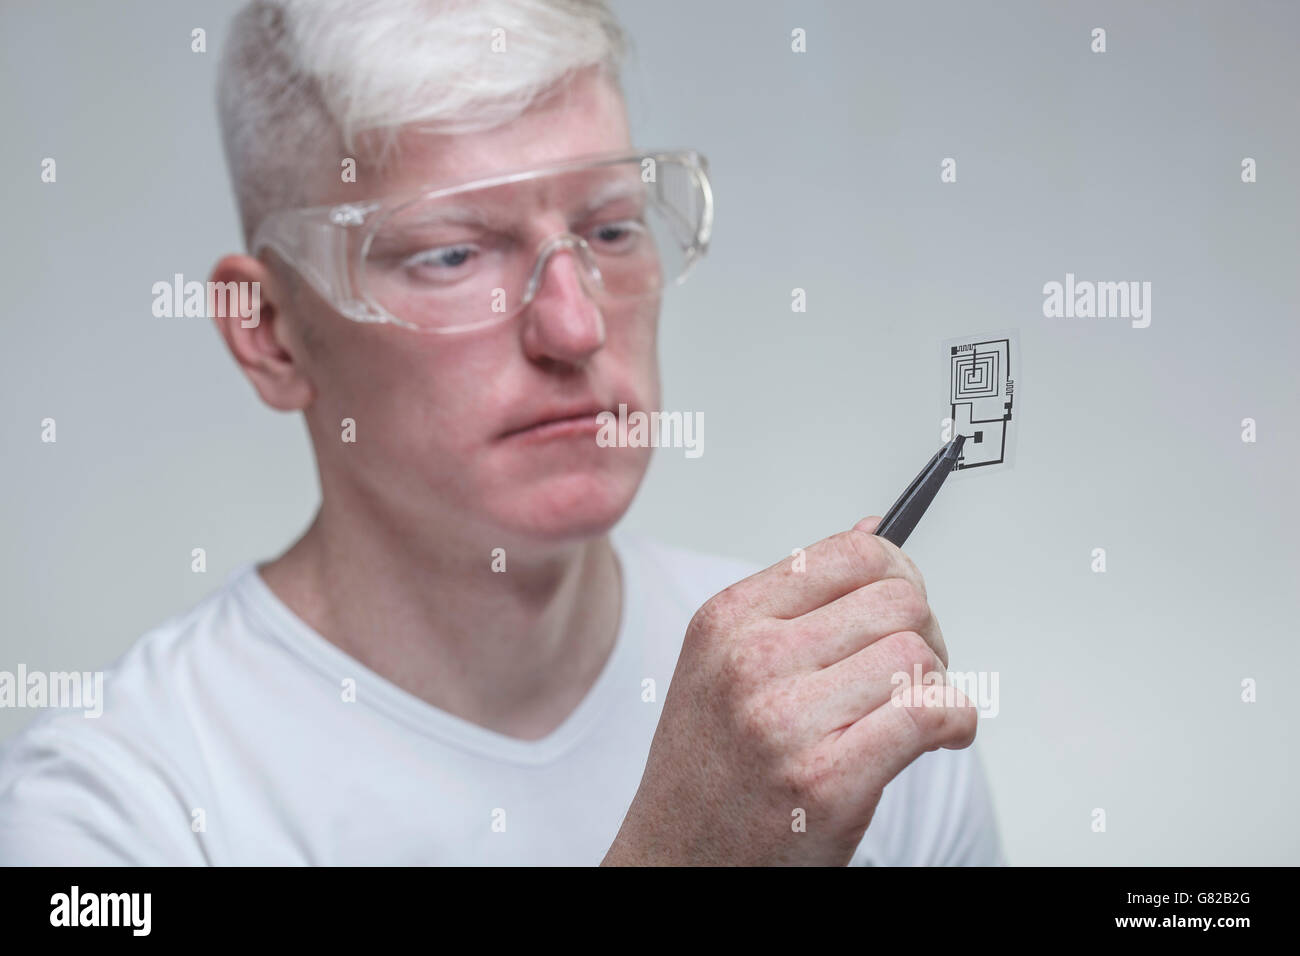 Albino man wearing protective eyewear while examining chip against gray background Stock Photo